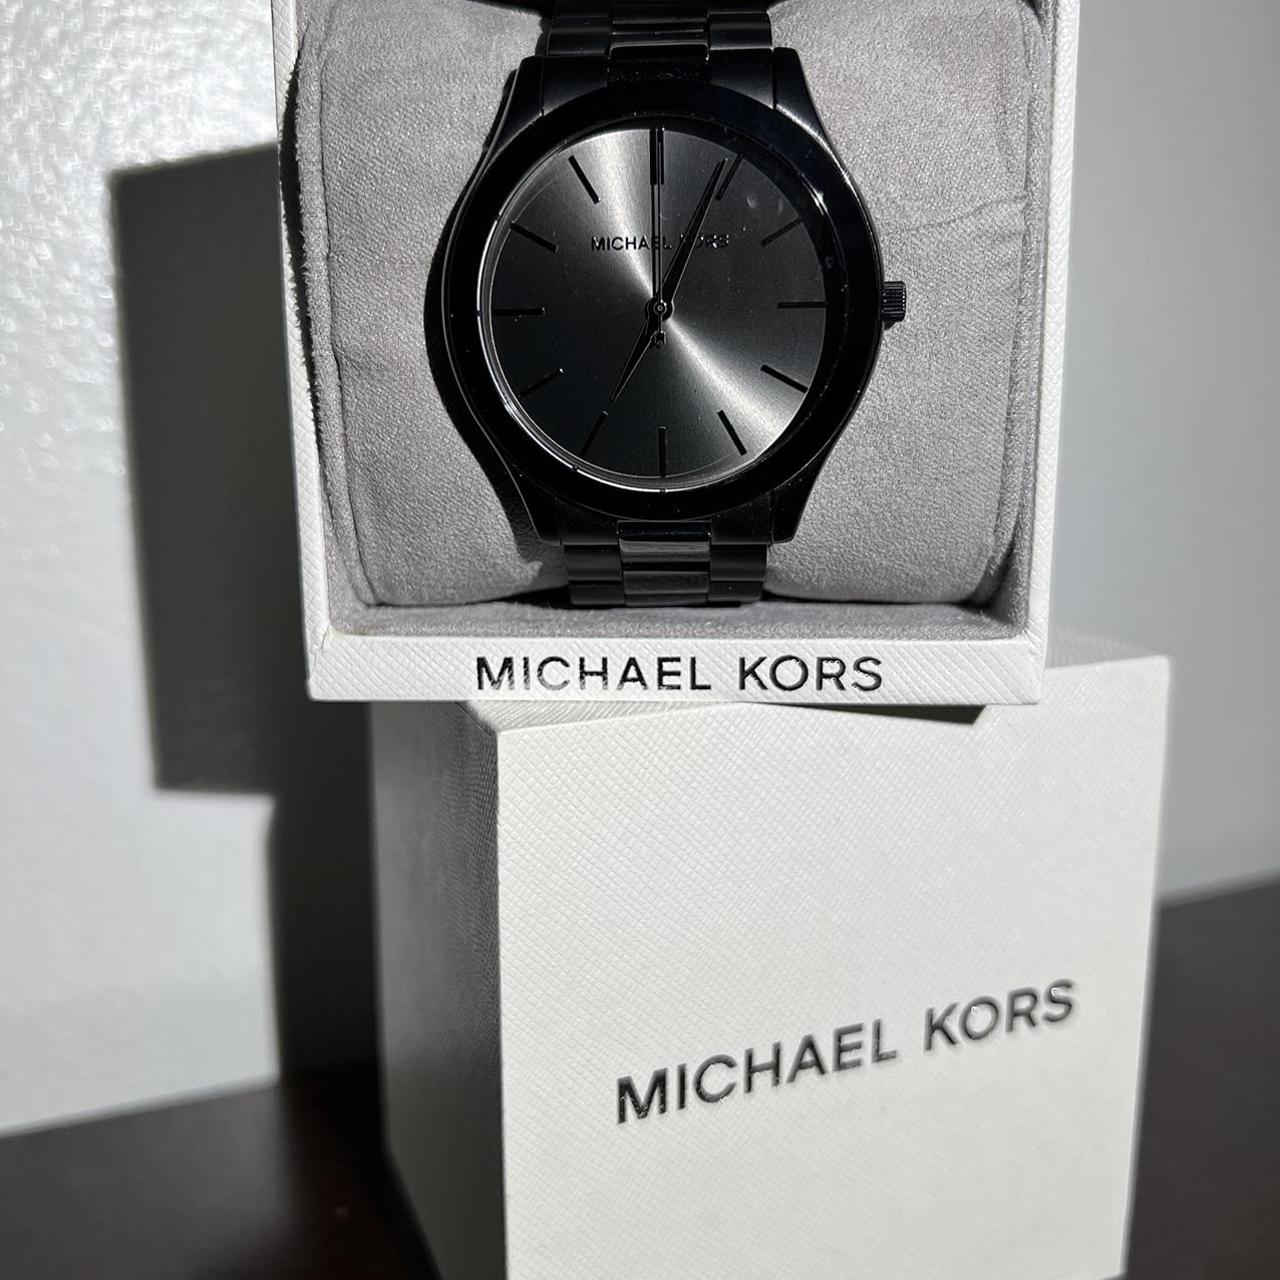 Michael Kors Men's Black and Silver Watch | Depop